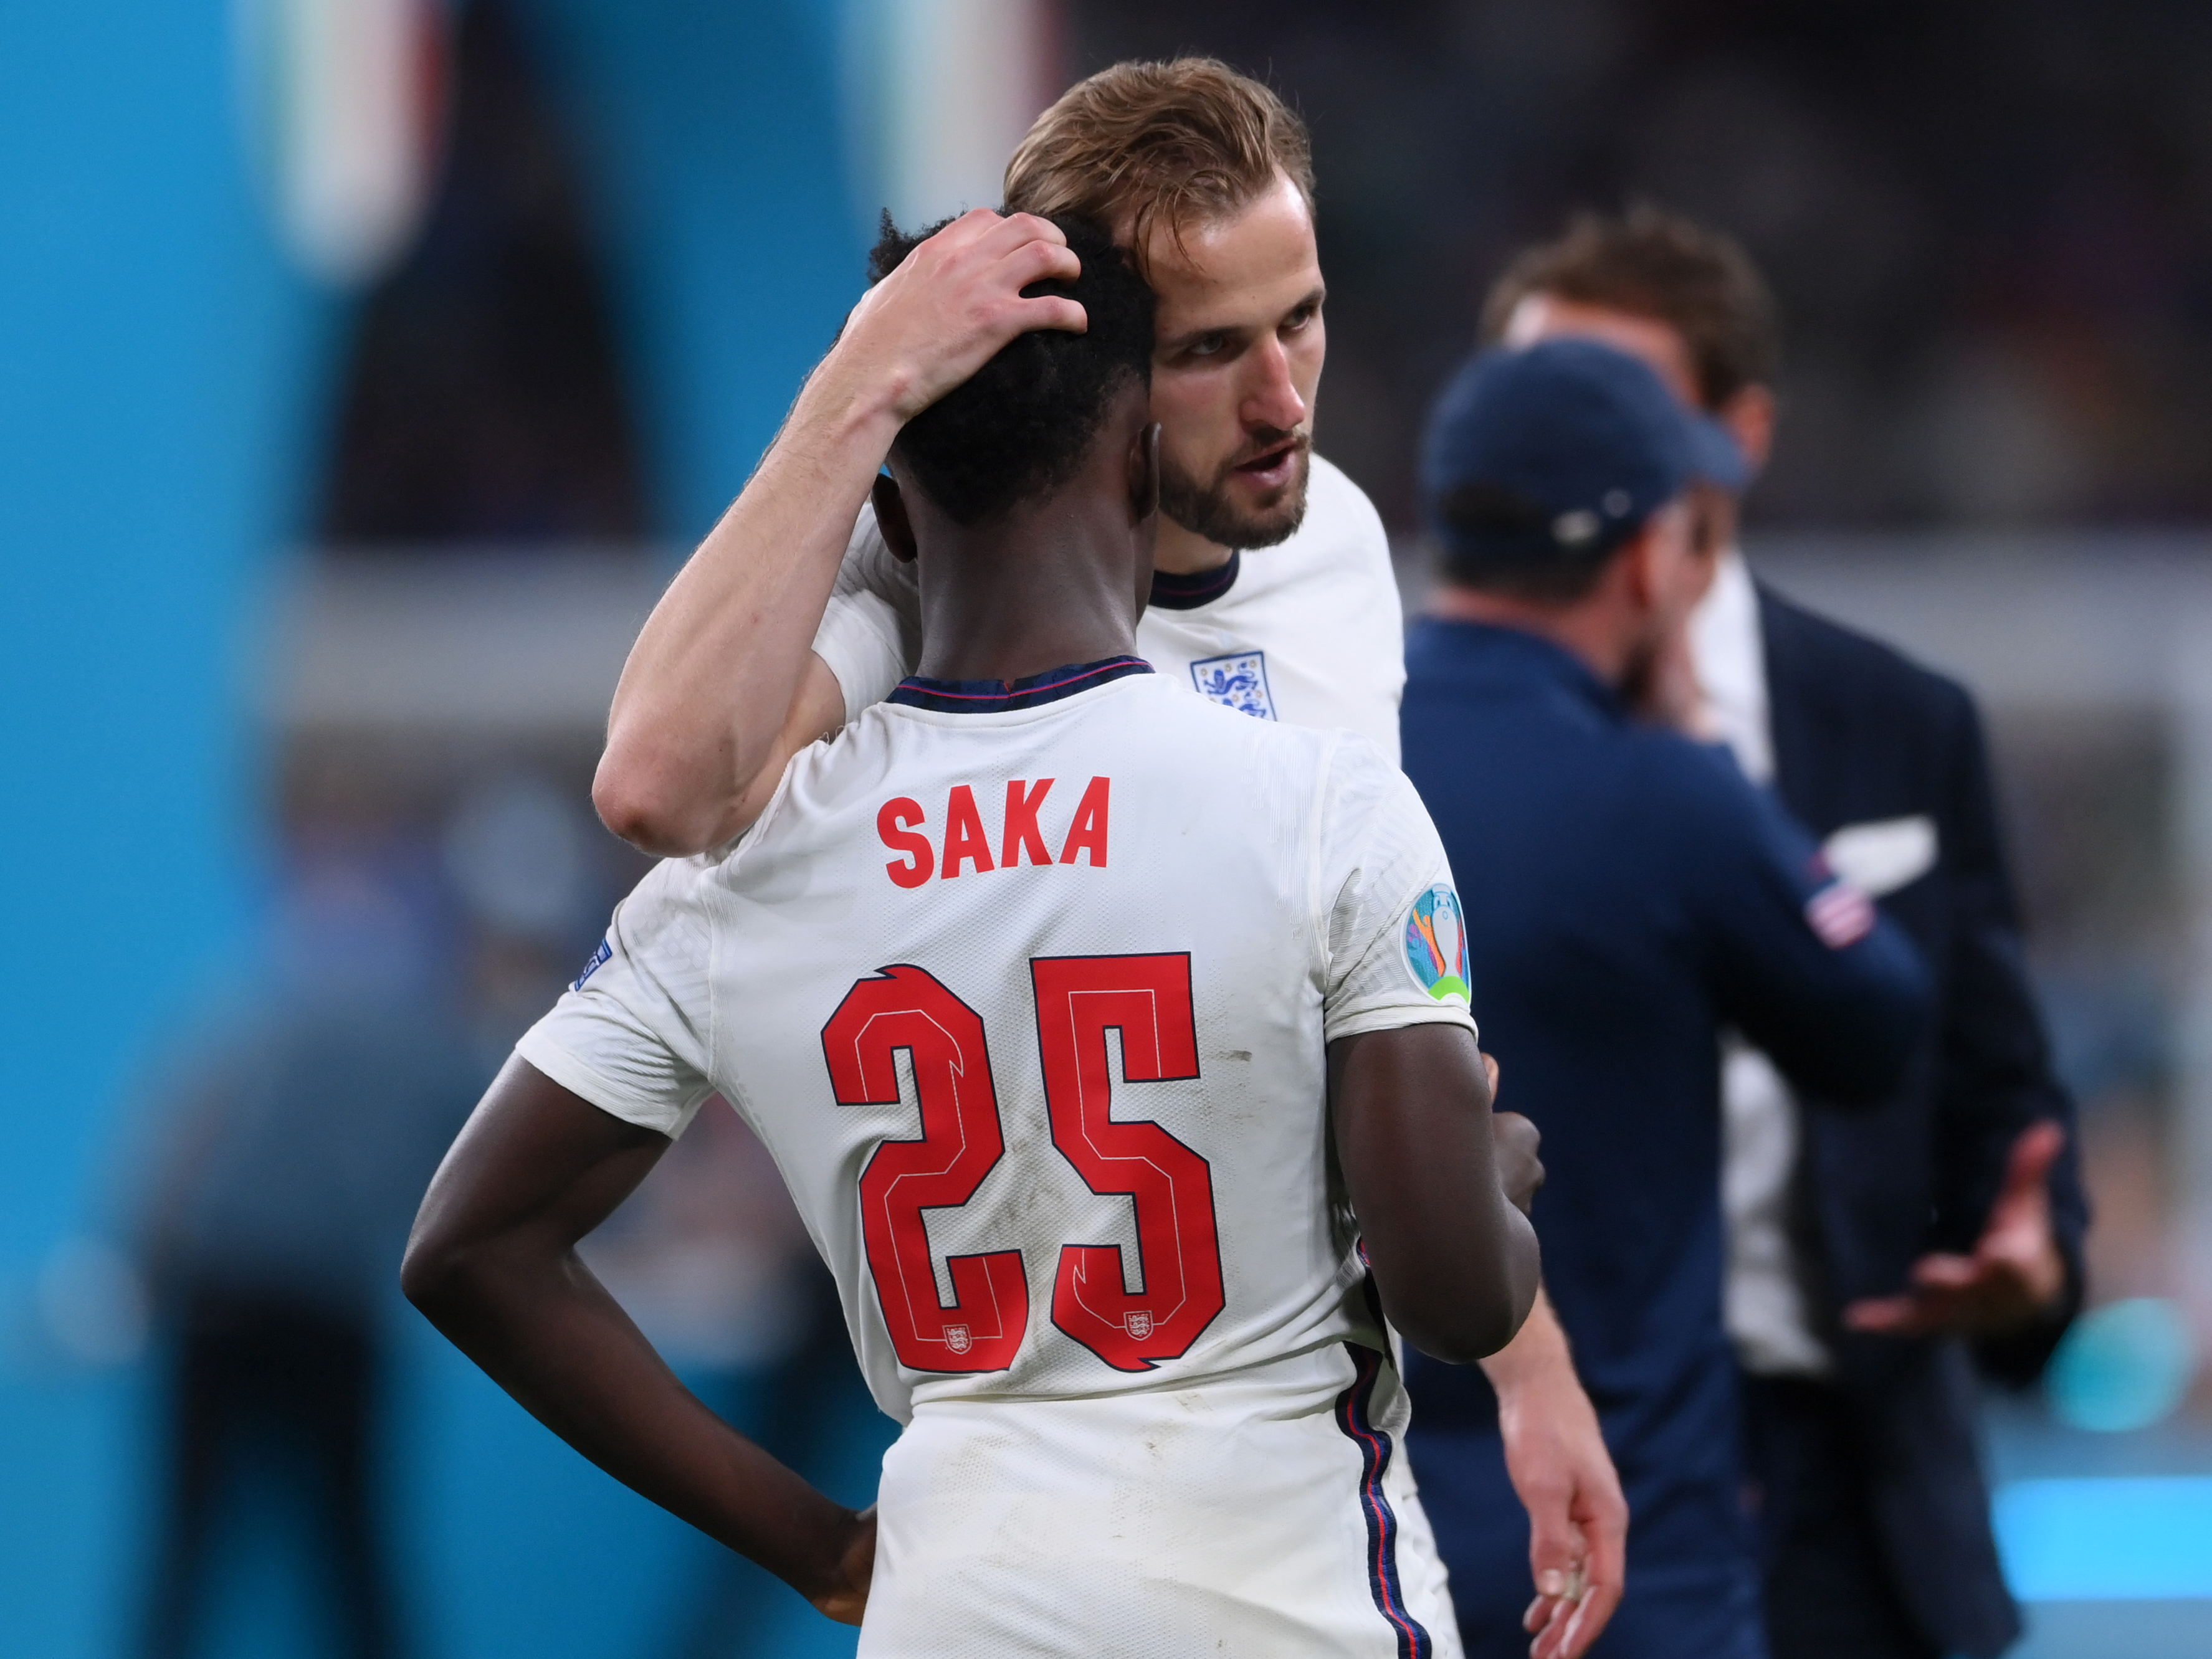 Kane consola Saka após disputa de pênaltis Euro 2020